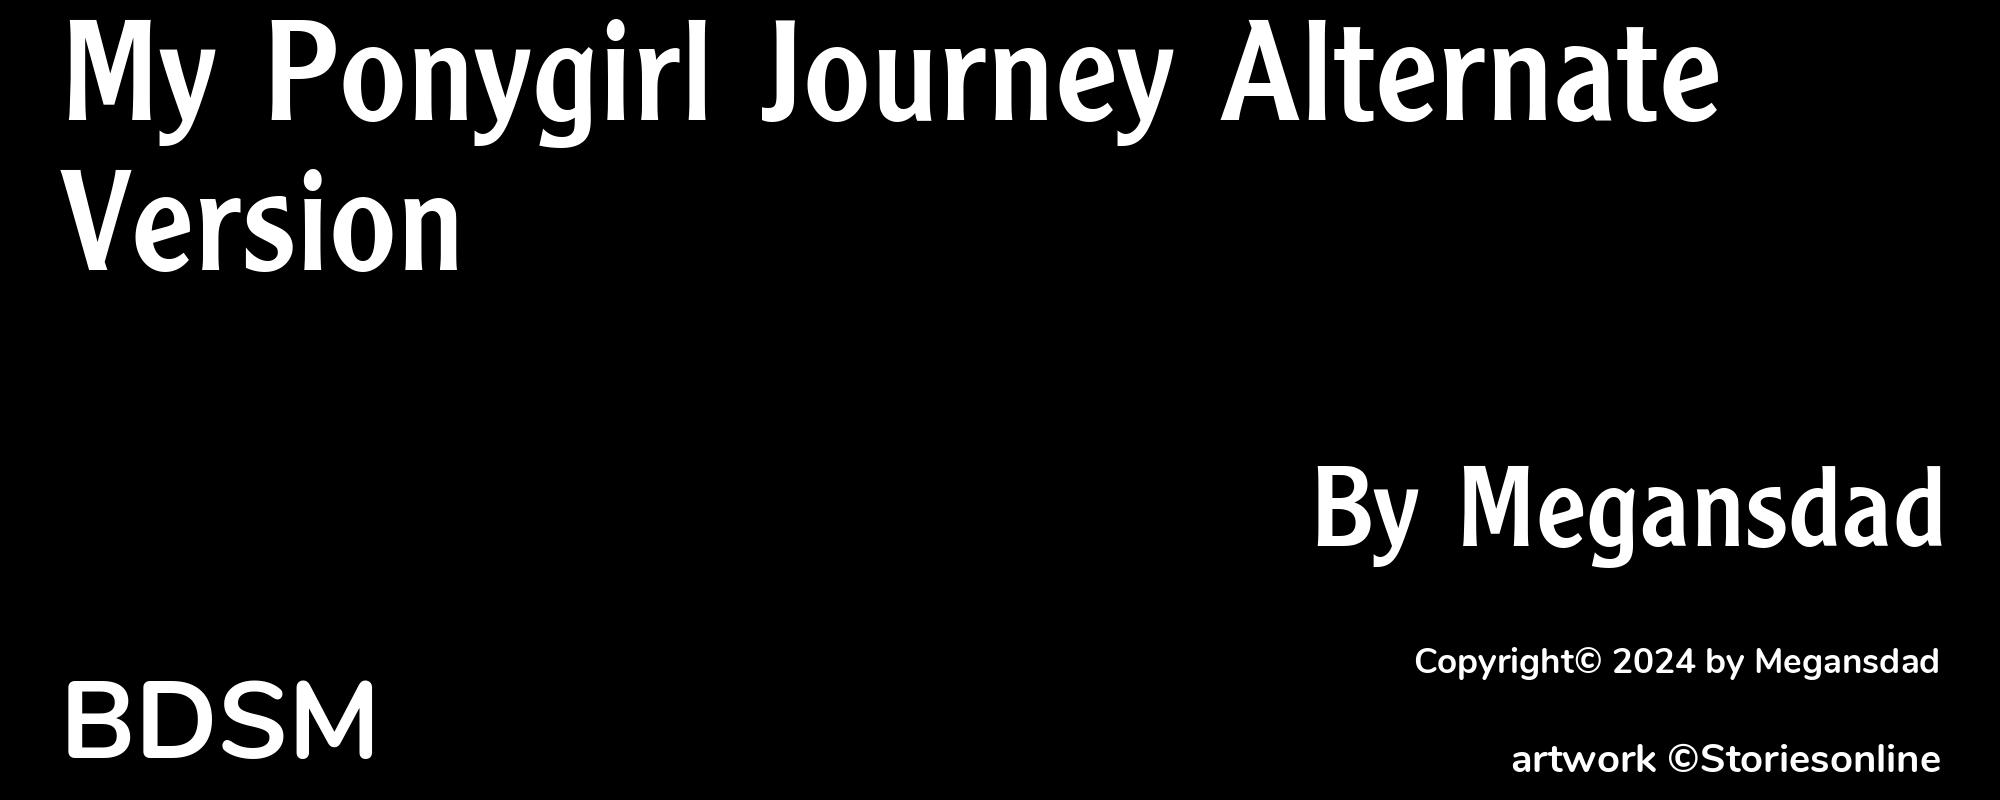 My Ponygirl Journey Alternate Version - Cover